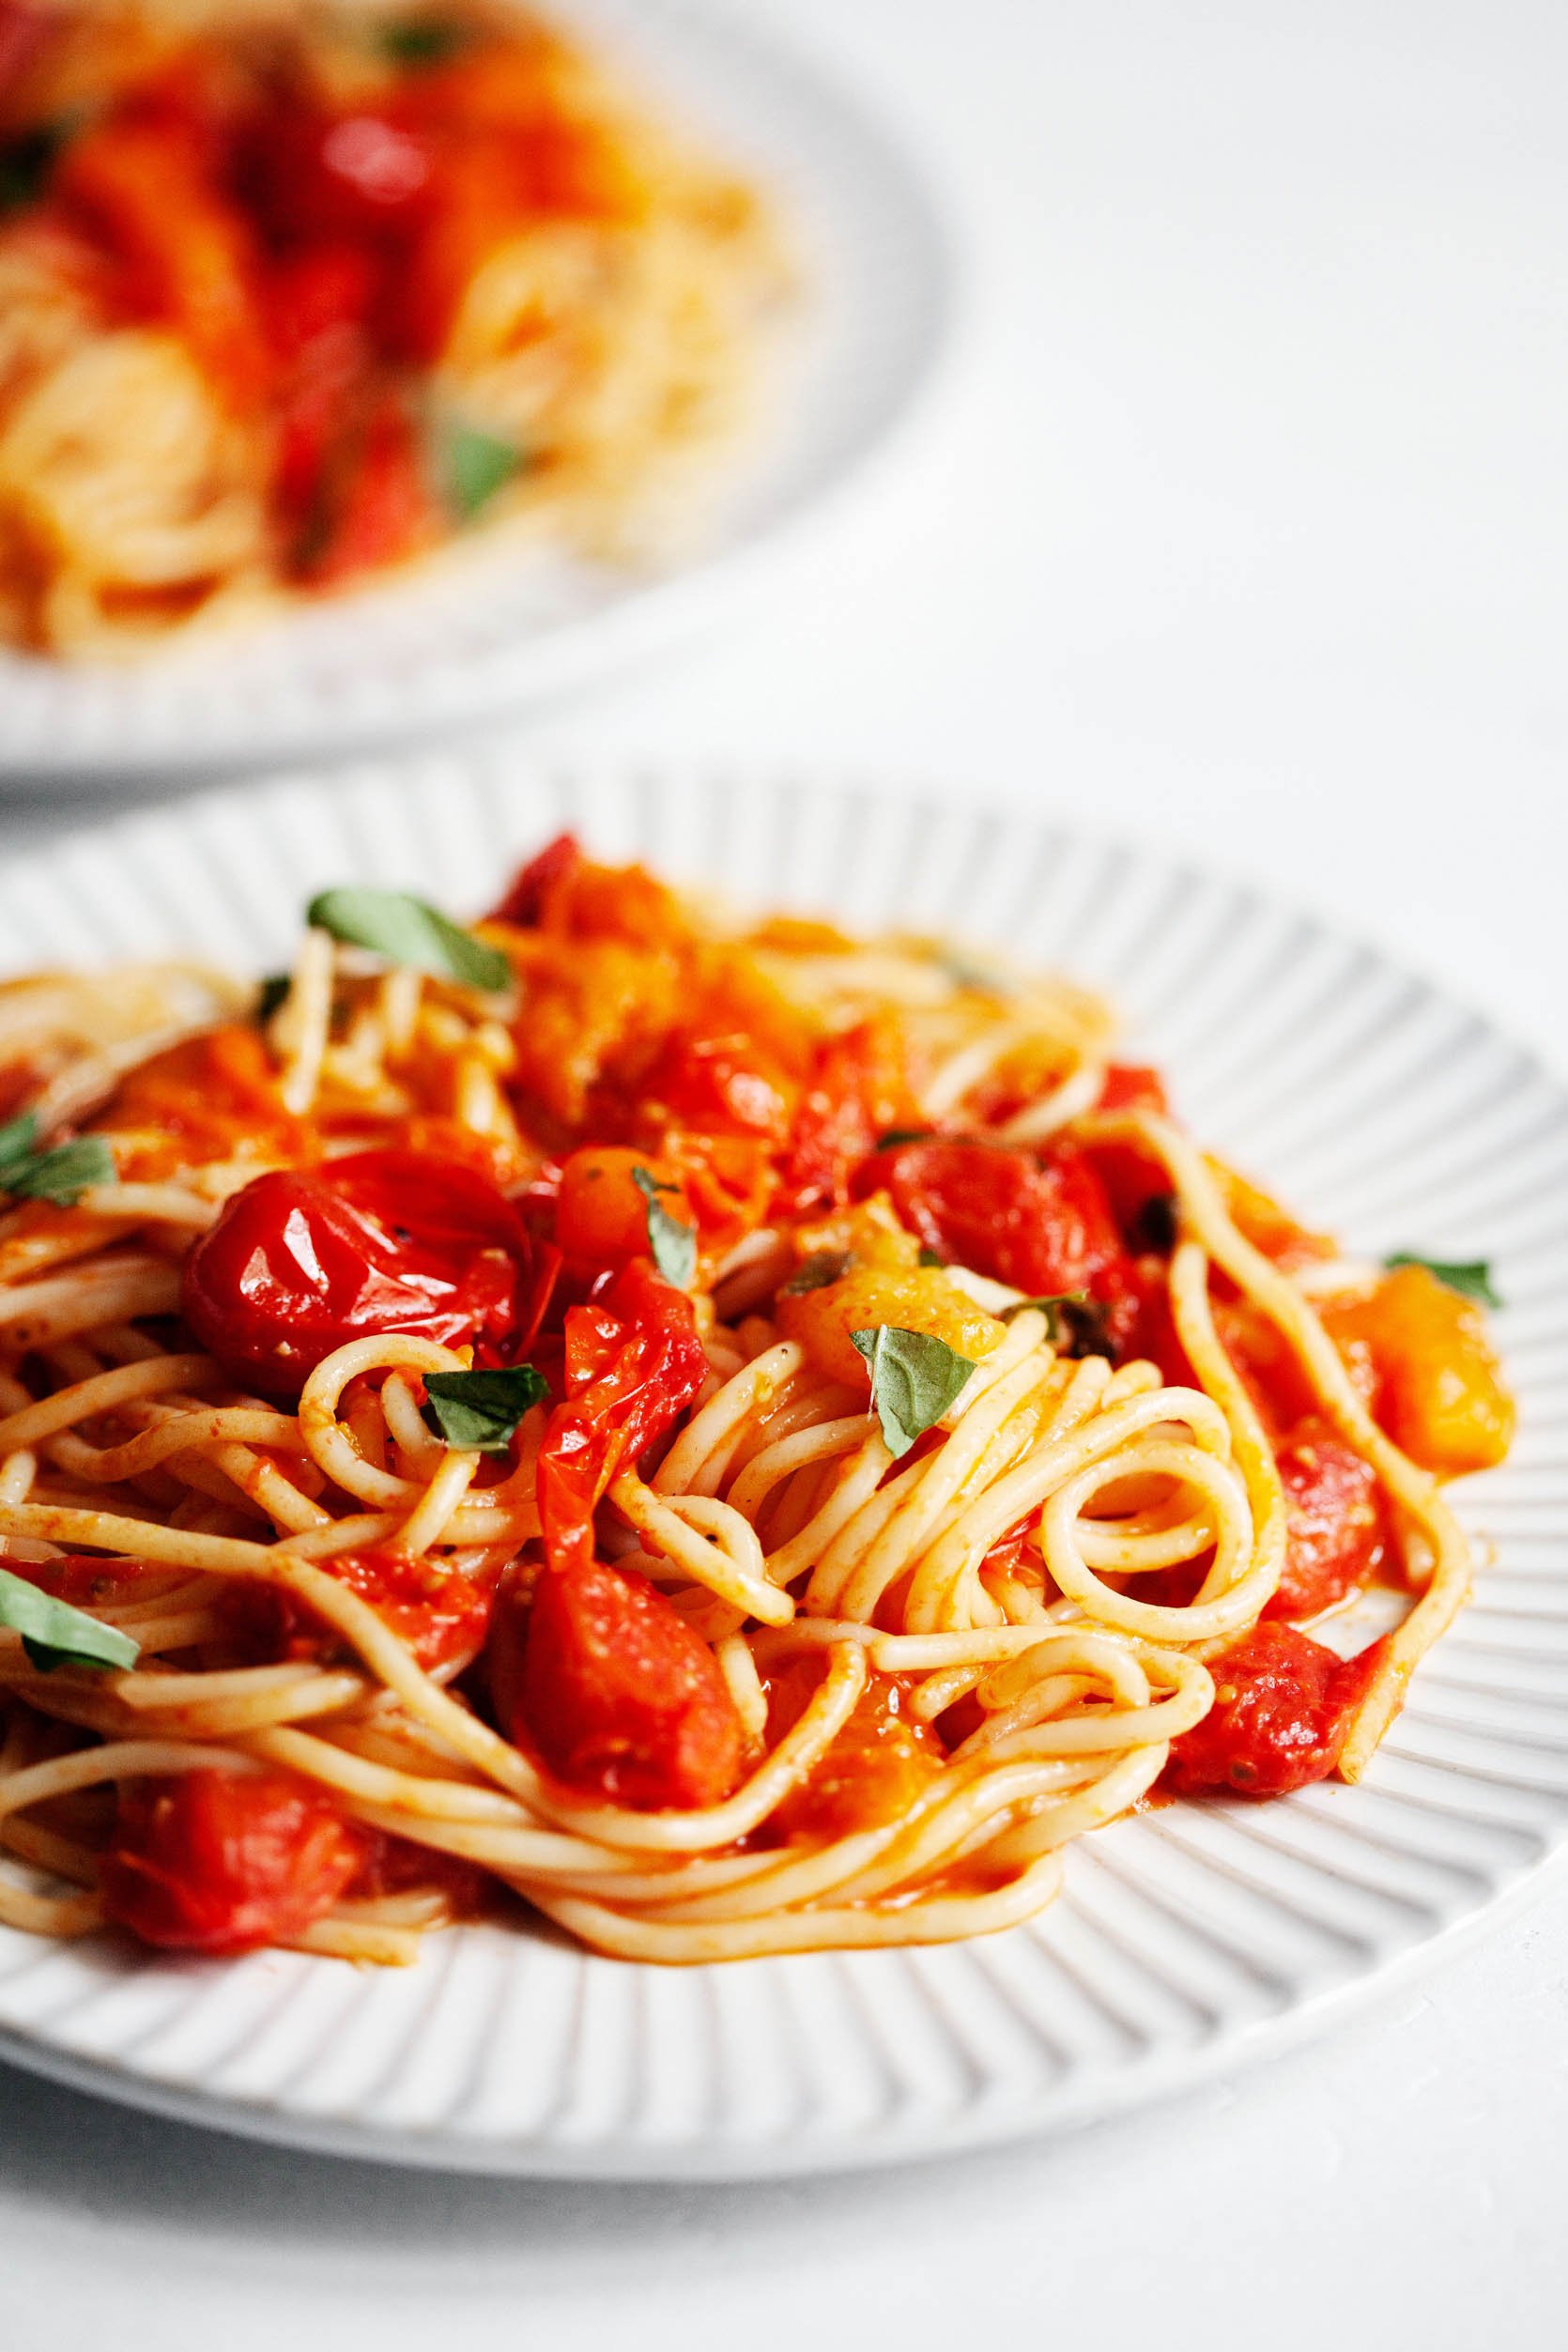 Simple Vegan Burst Cherry Tomato Pasta | The Full Helping